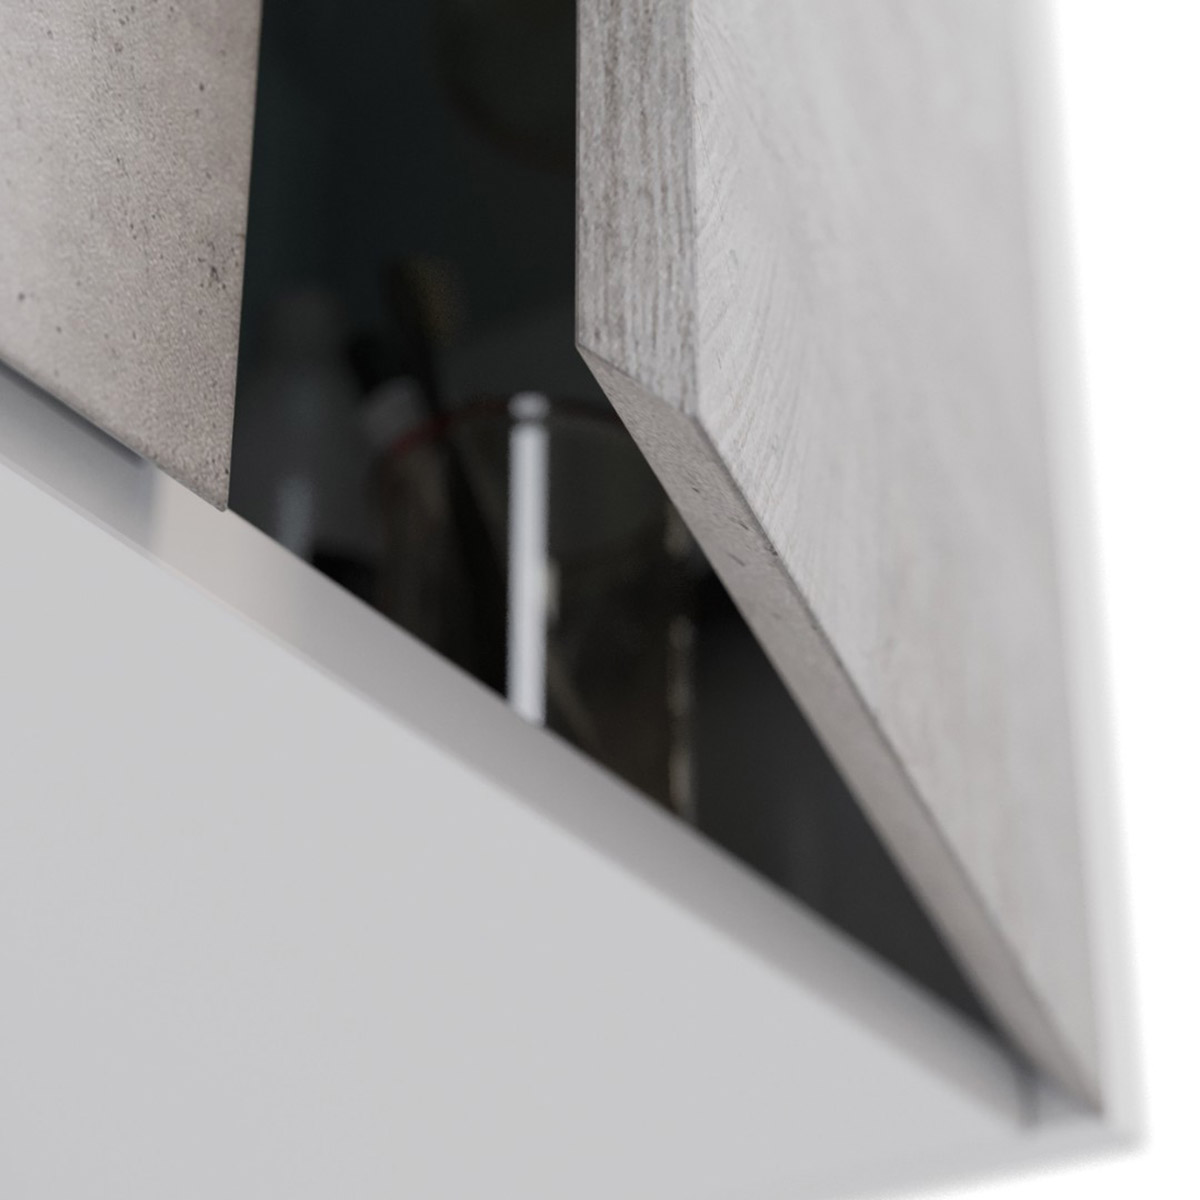 Шкаф Lemark COMBI 60 см подвесной, 2-х дверный, цвет фасада: Бетон, цвет корпуса: Белый глянец